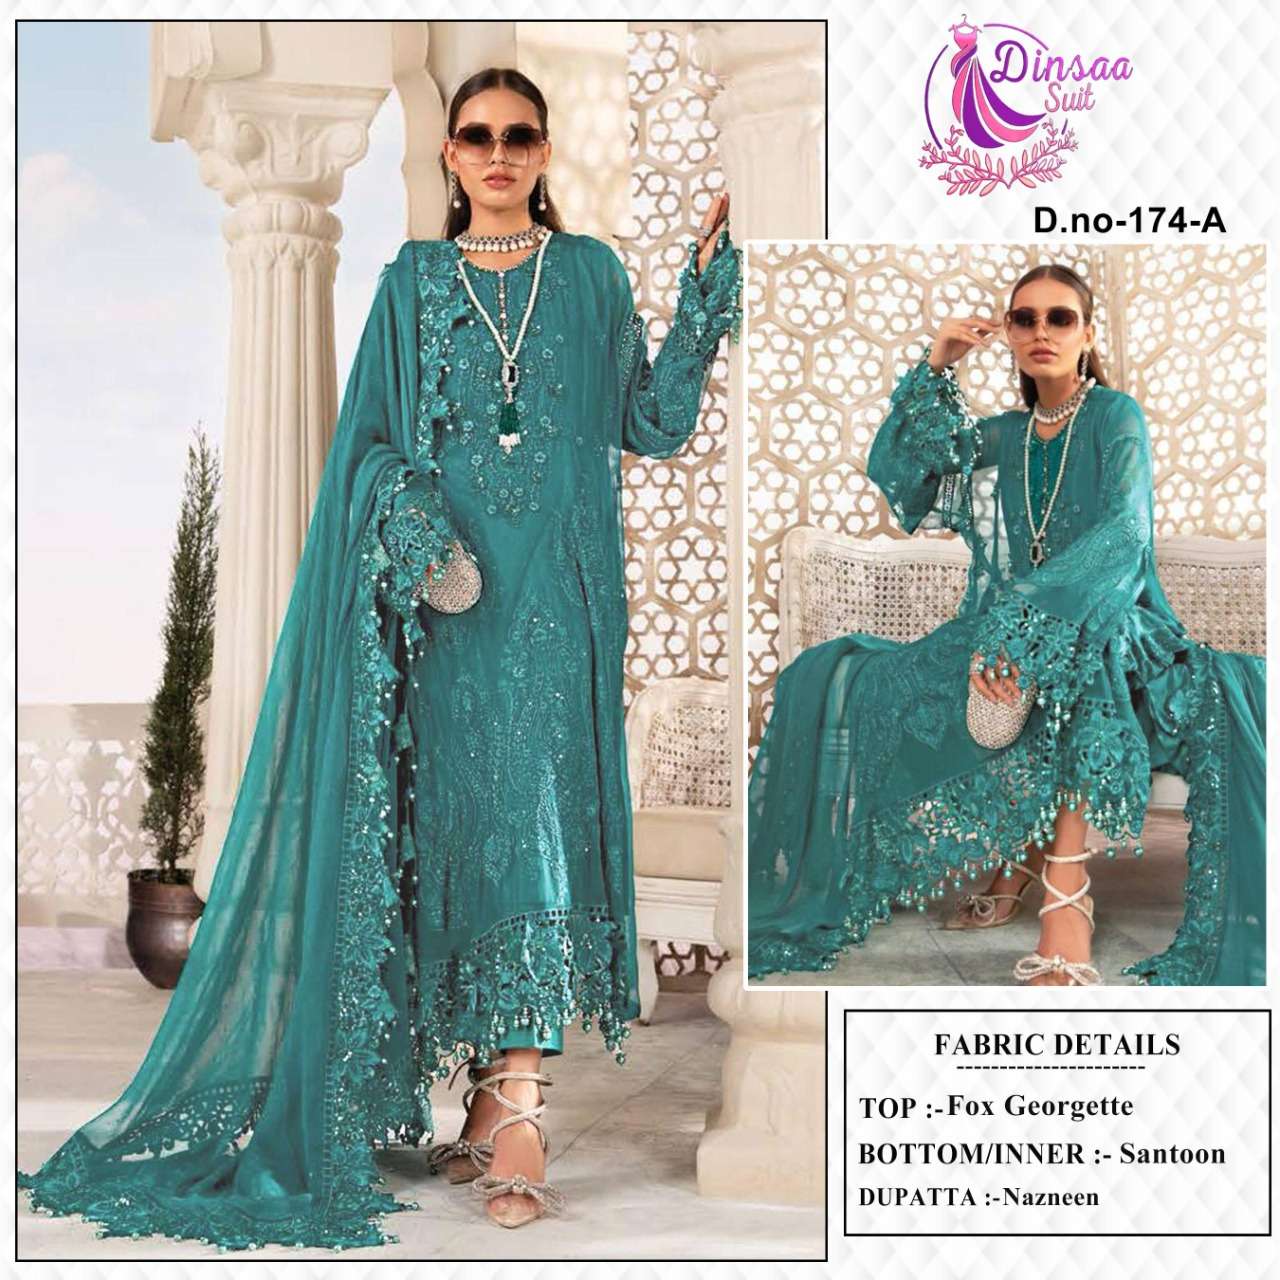 dinsaa maria b 174 design colors pakistani dresses 